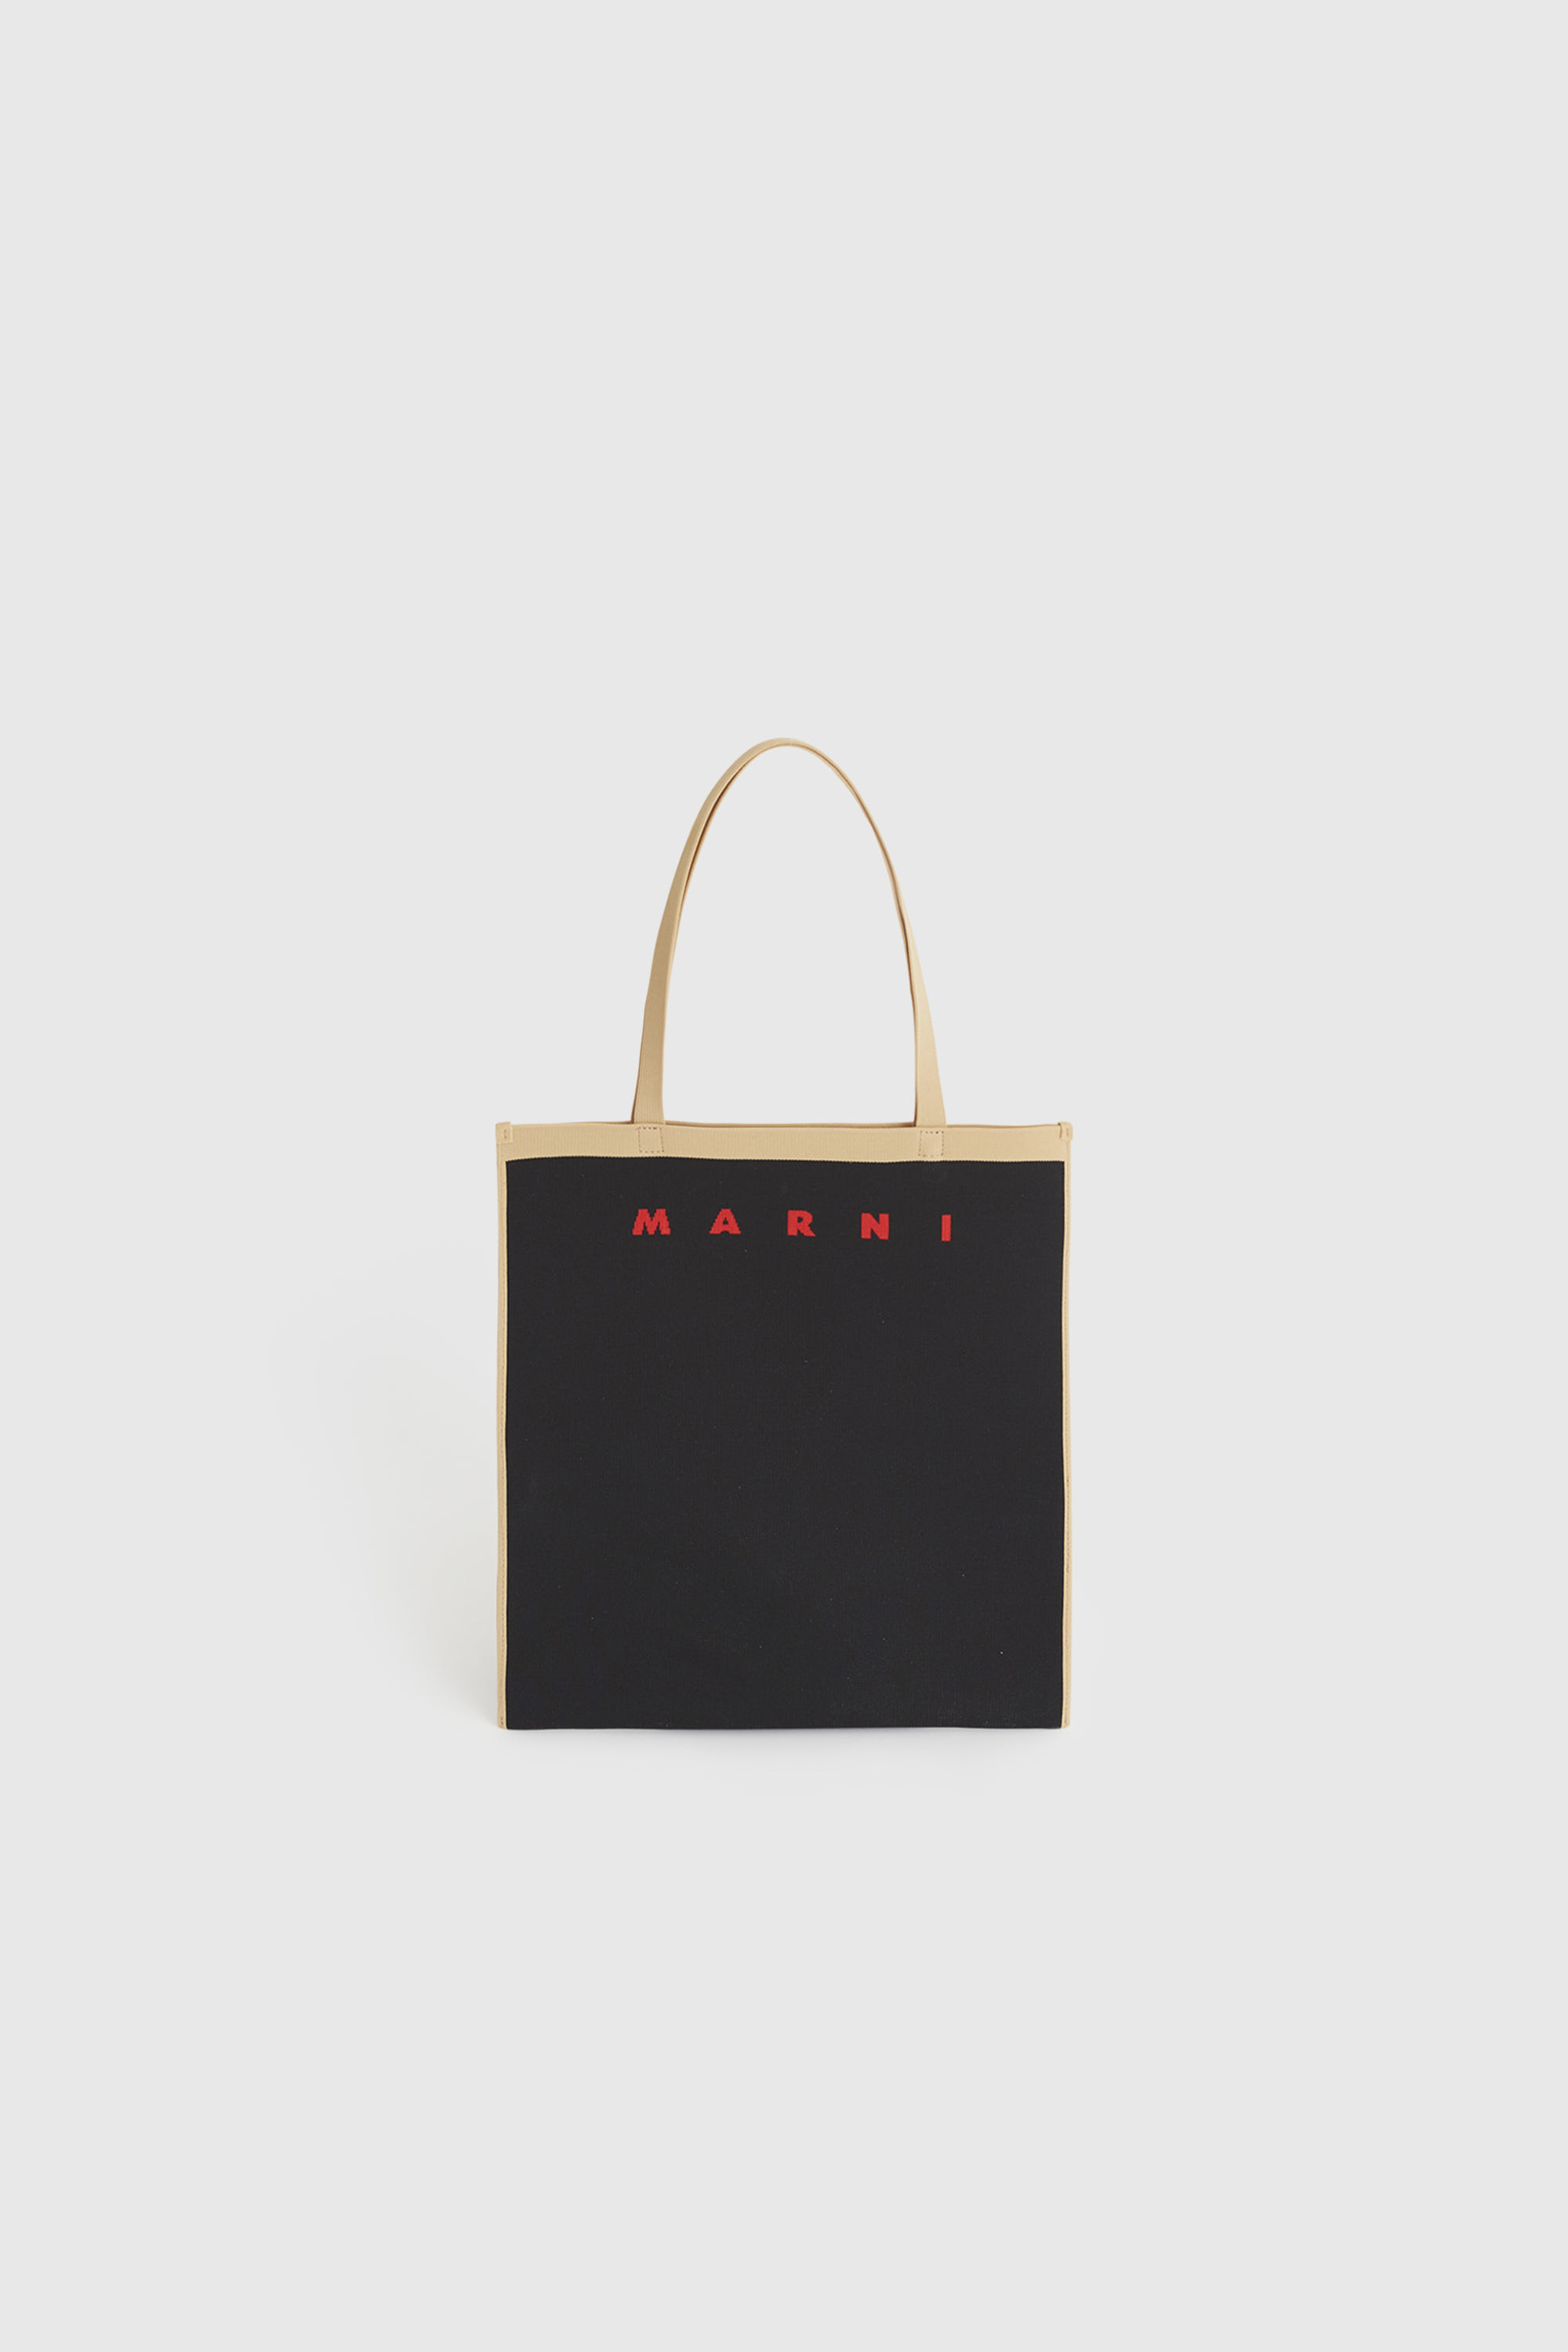 MARNI Shopping Bag Black / silk white / red | WoodWood.com